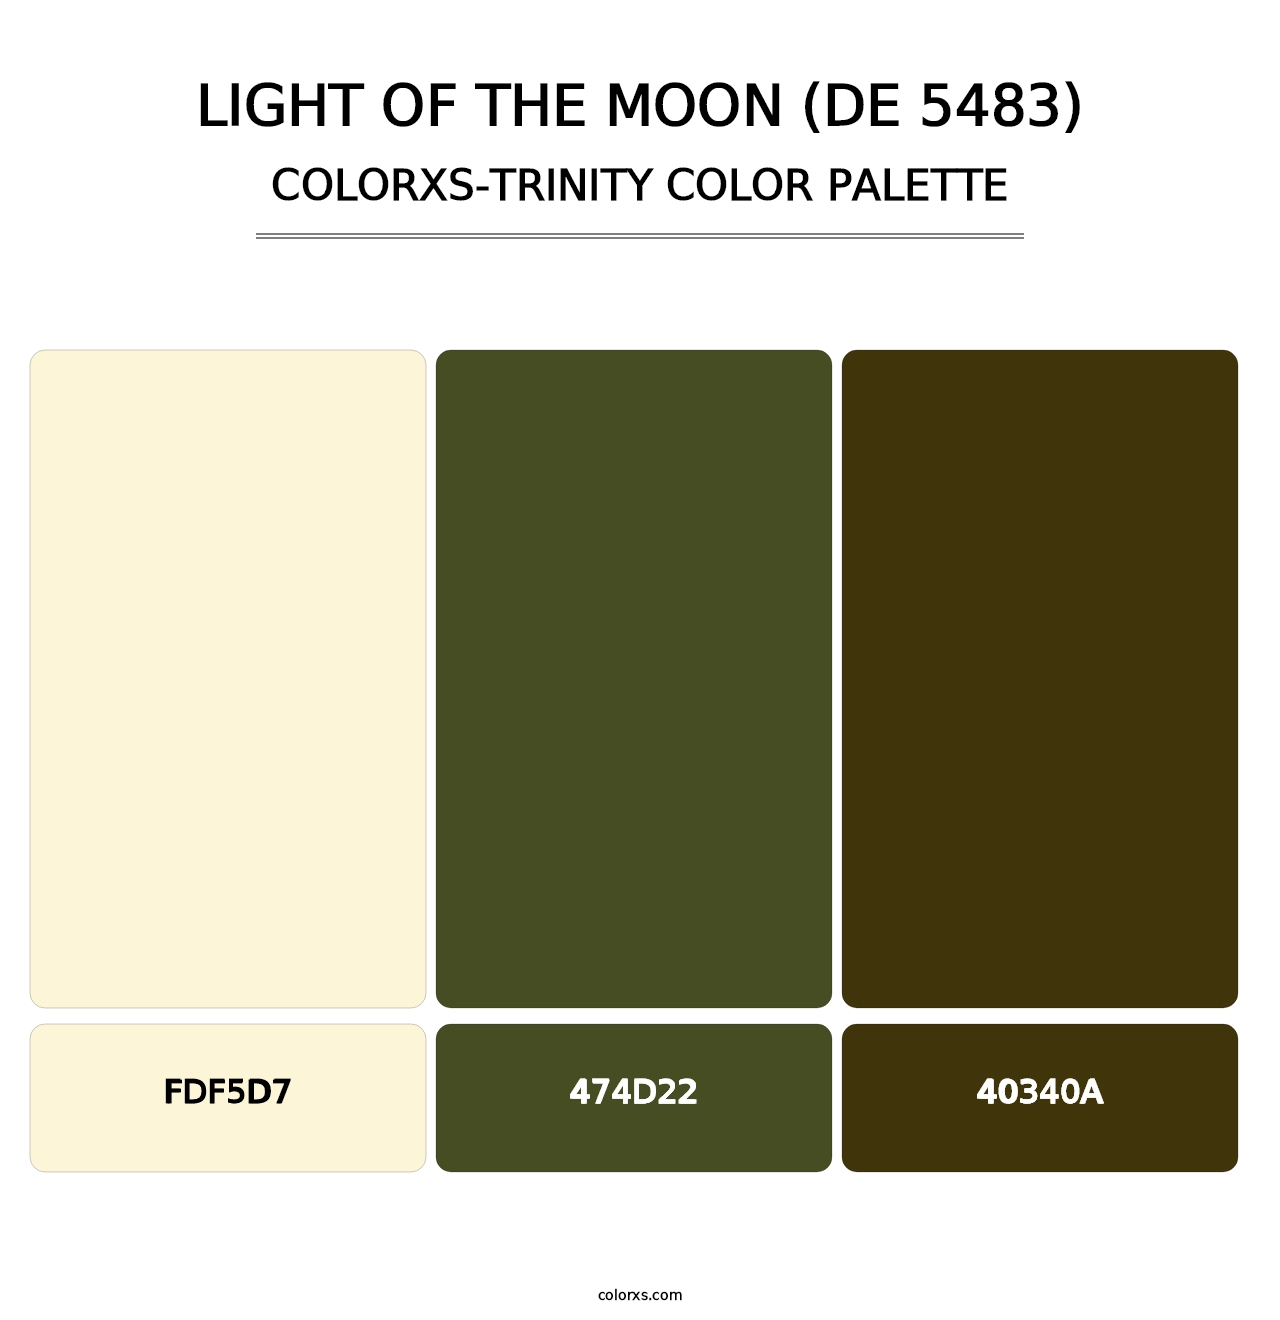 Light of the Moon (DE 5483) - Colorxs Trinity Palette